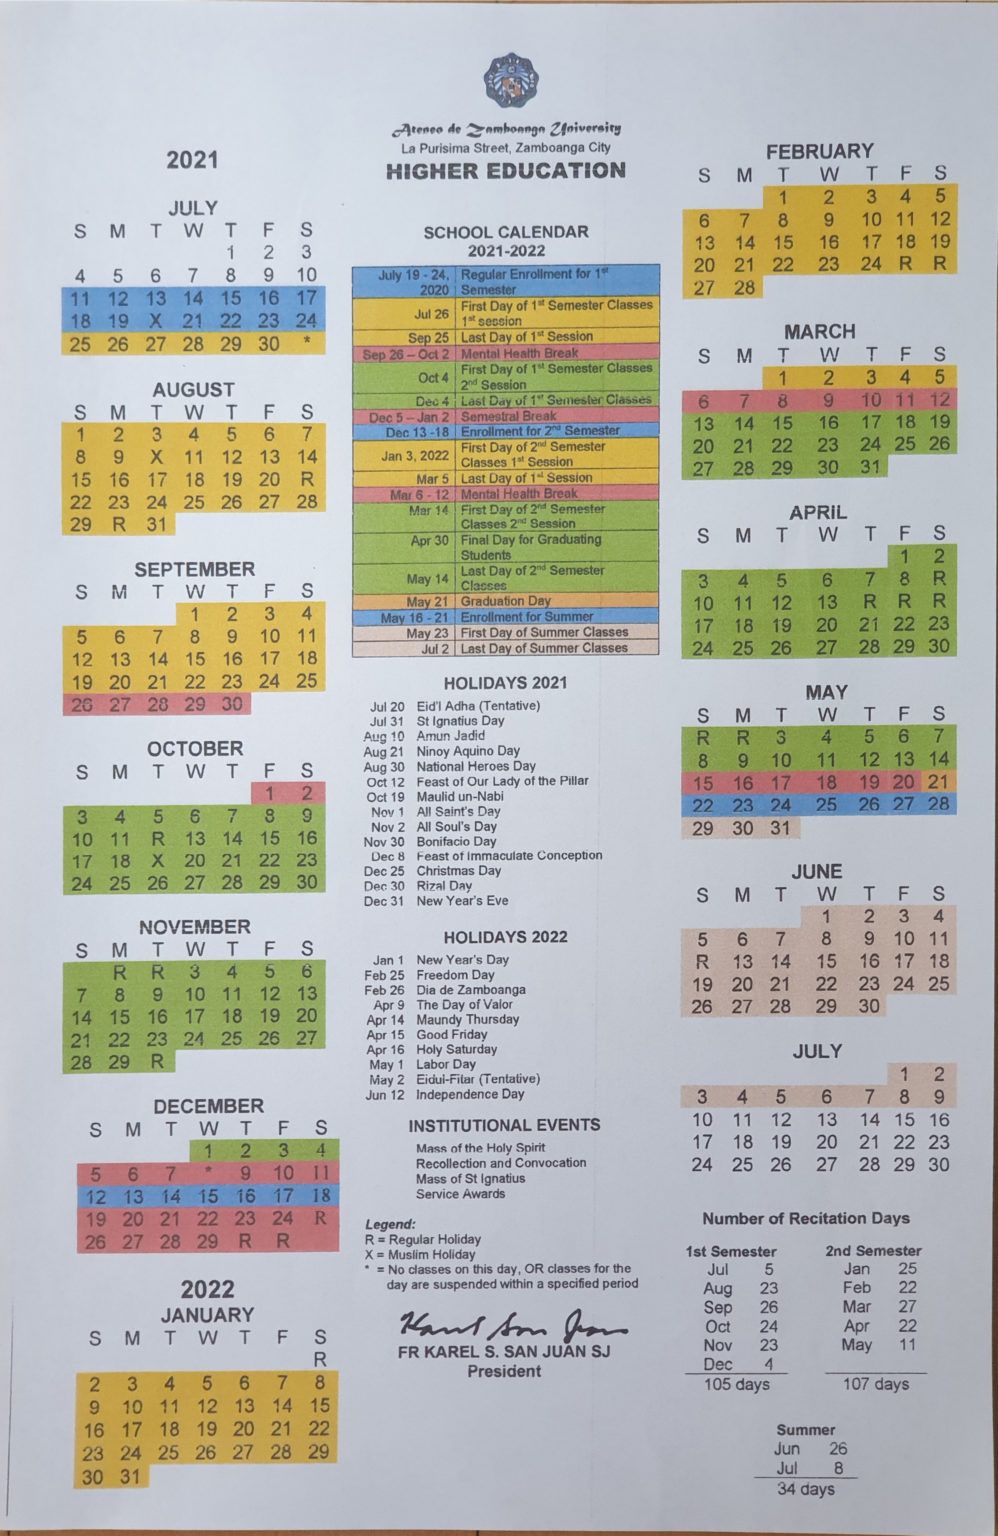 Ateneo De Zamboanga University | School Calendar Sy 2021-2022